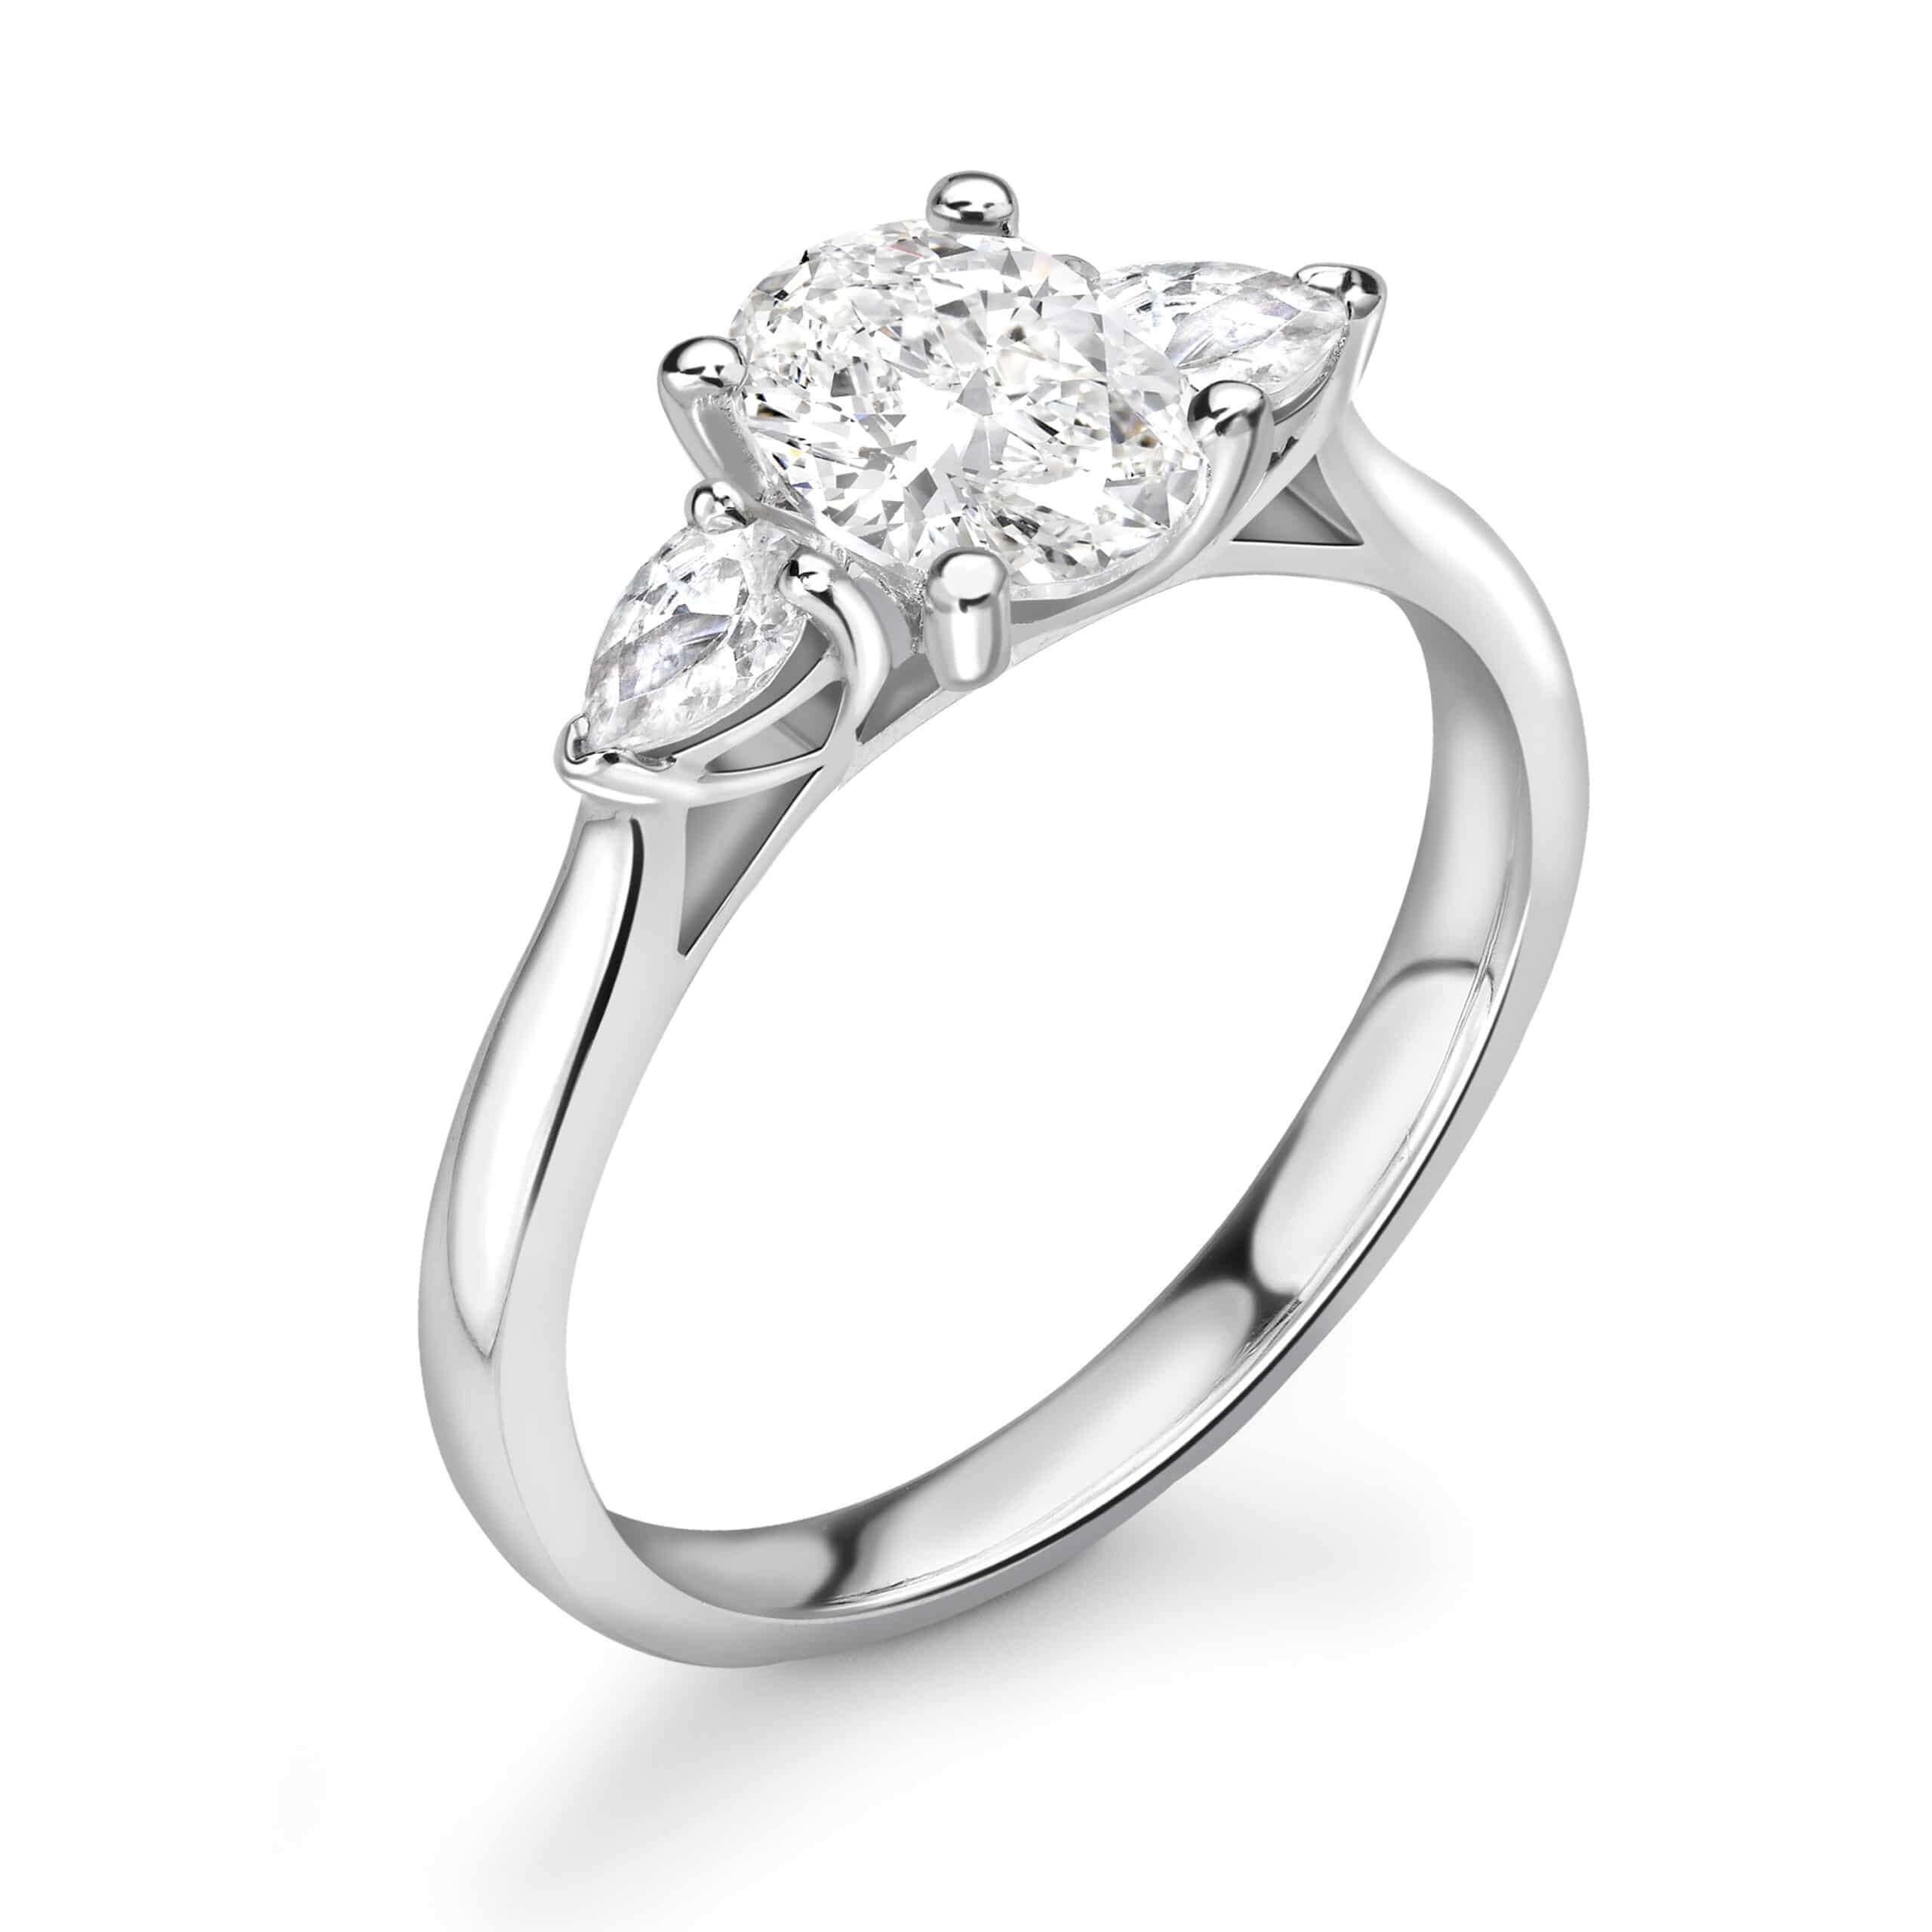 Oval Trilogy Diamond ring in Platinum